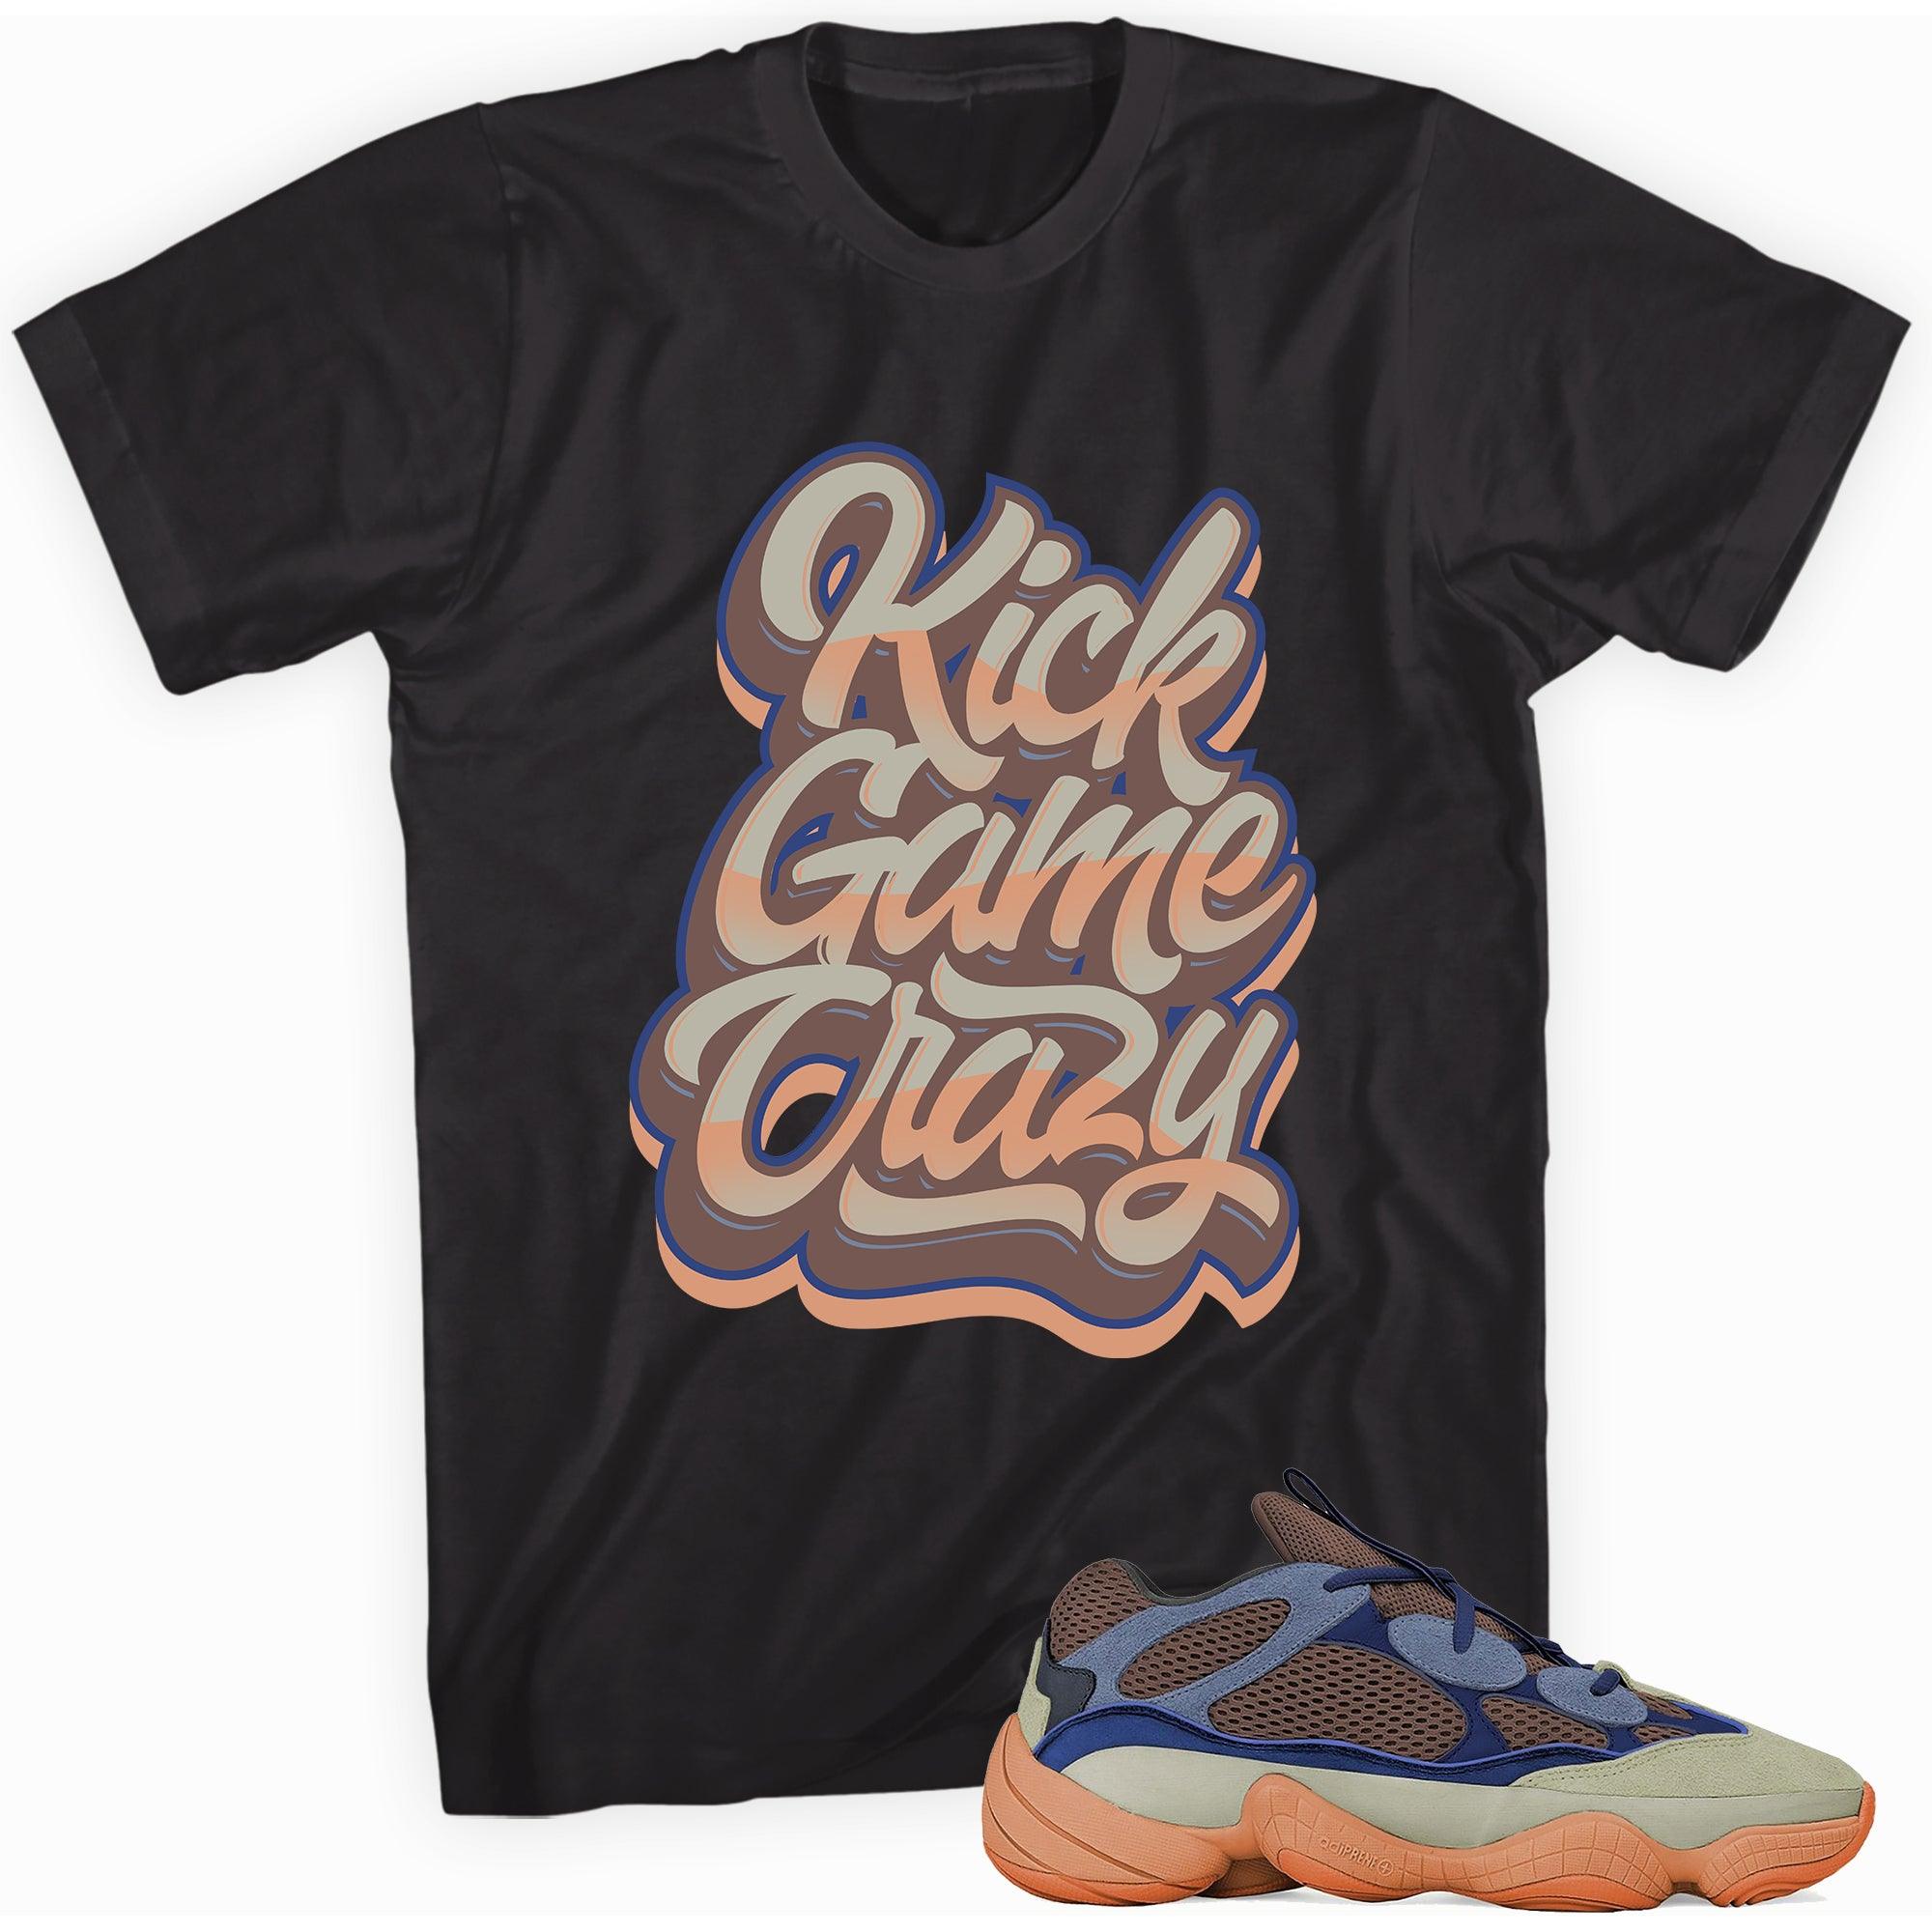 Black Kick Game Crazy Shirt Yeezy 500s Enflame photo